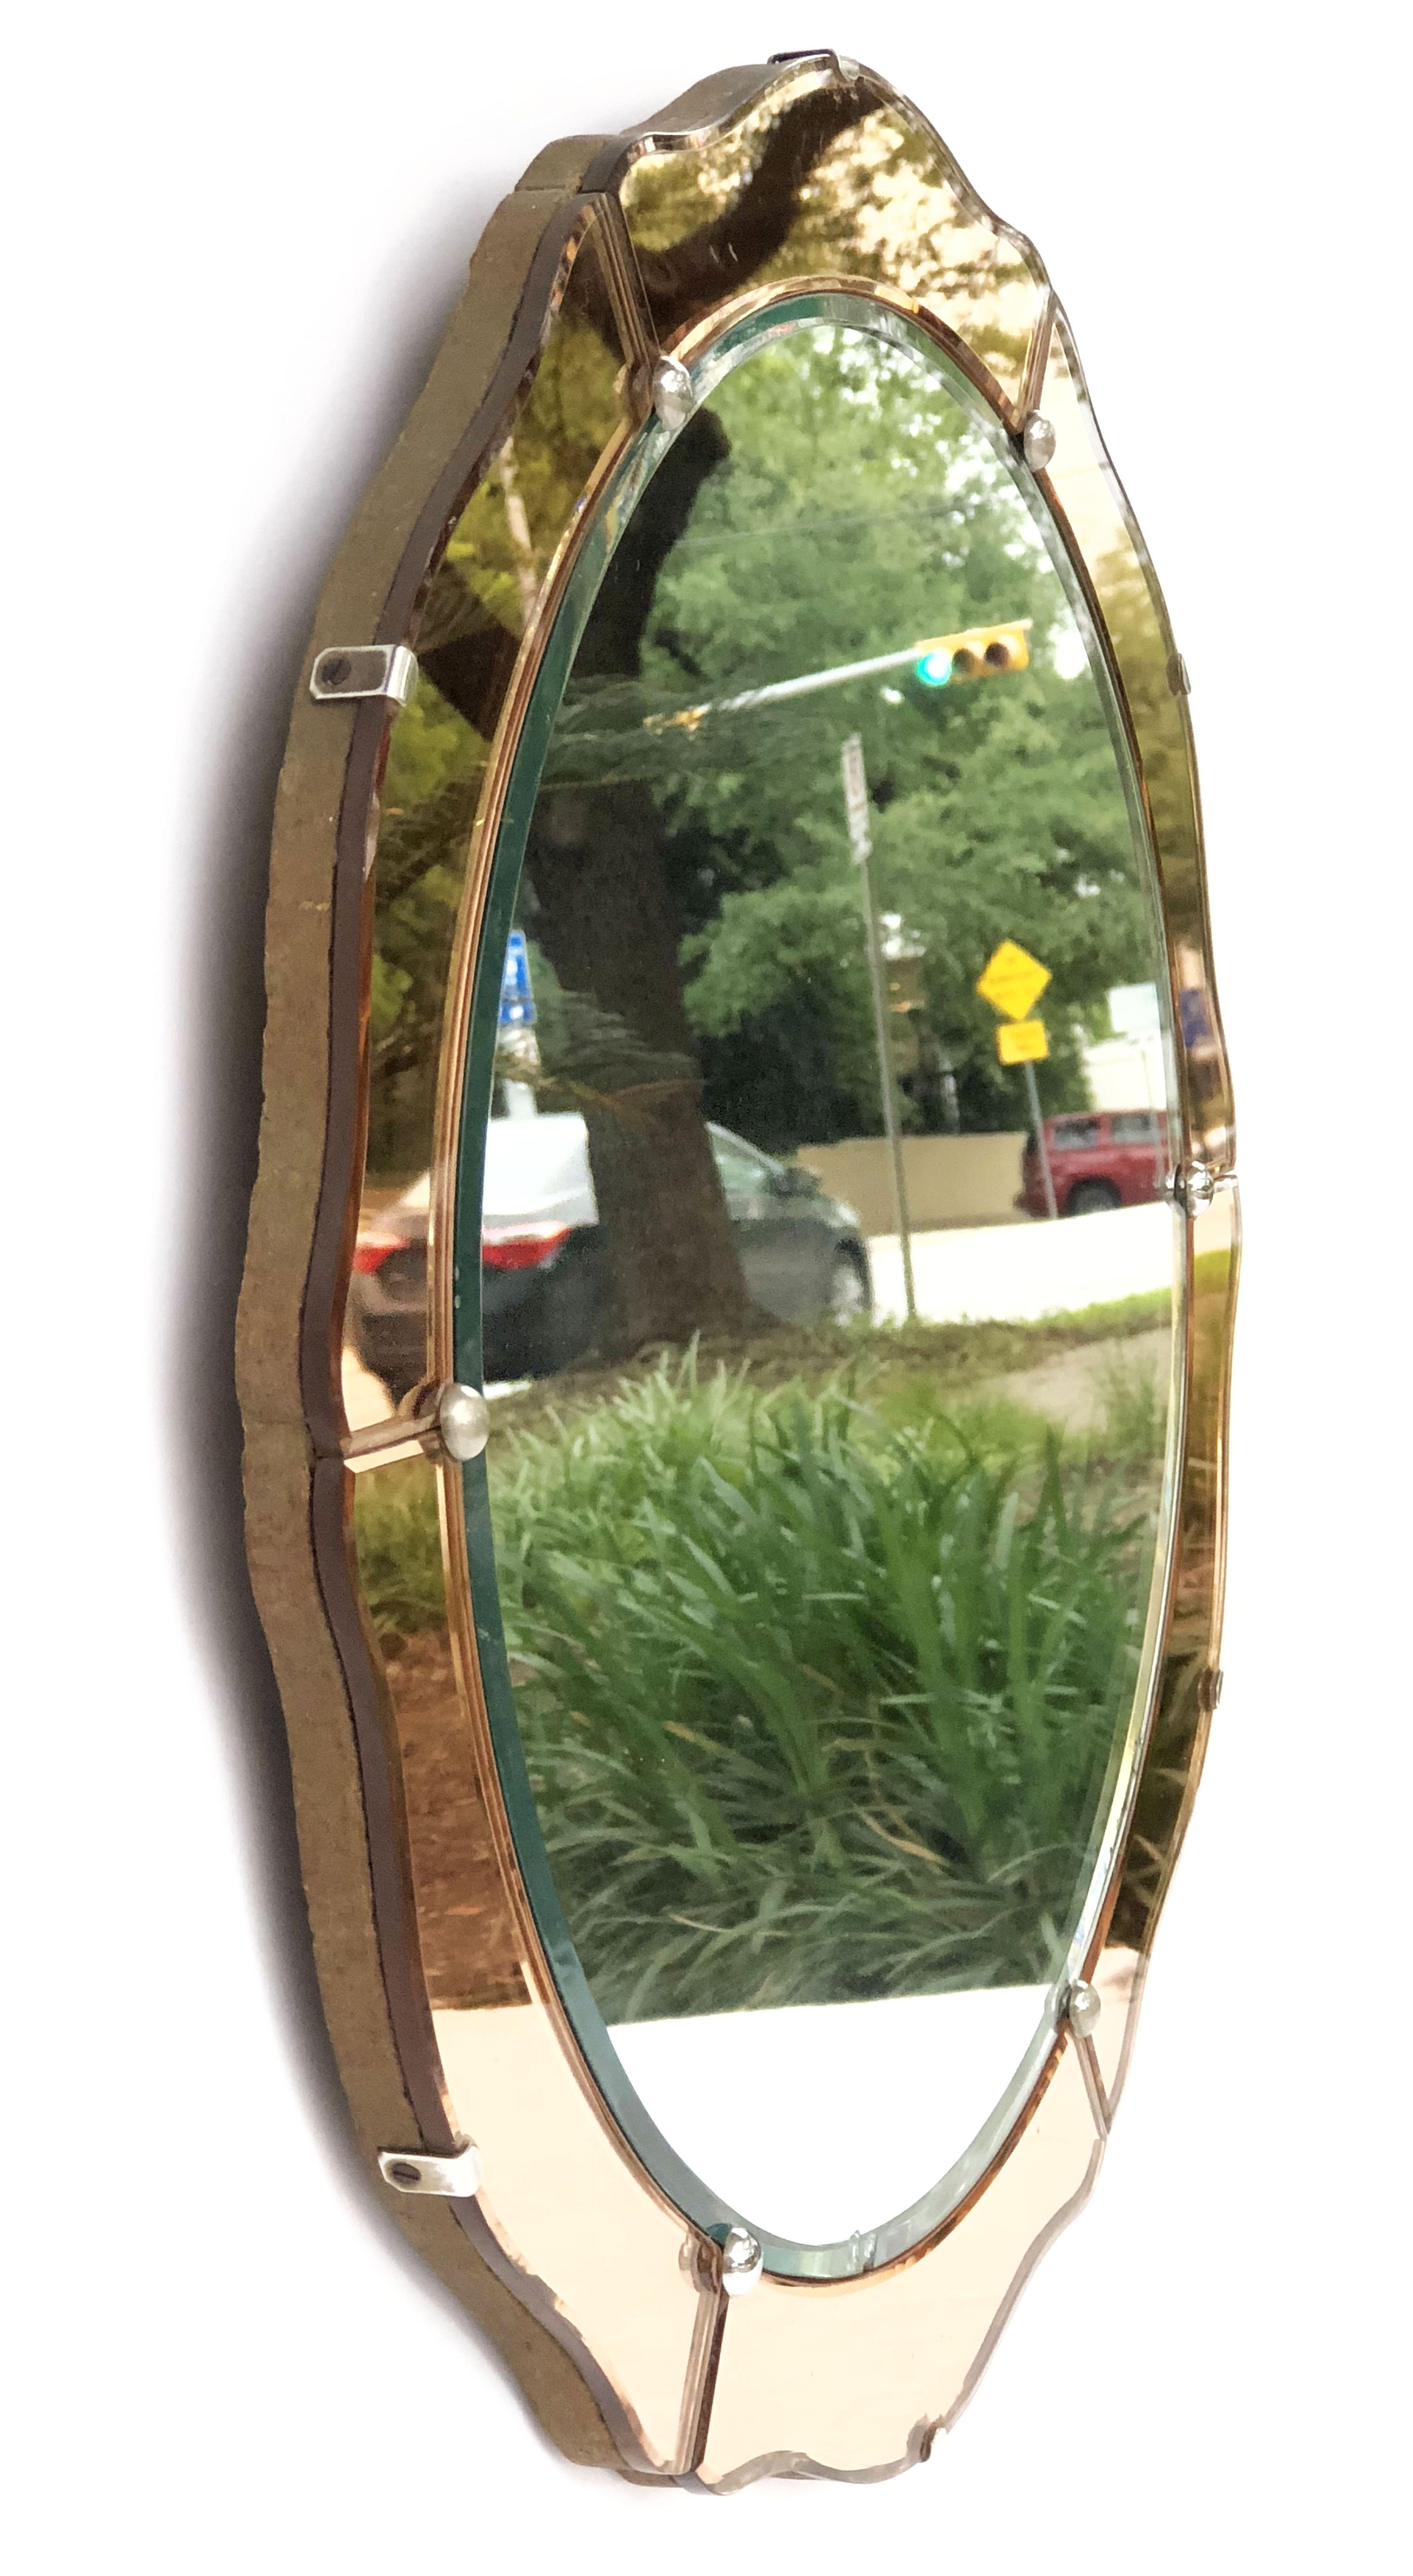 20th Century English Art Deco Round Mirror with Copper Glass (Diameter 19 3/4)